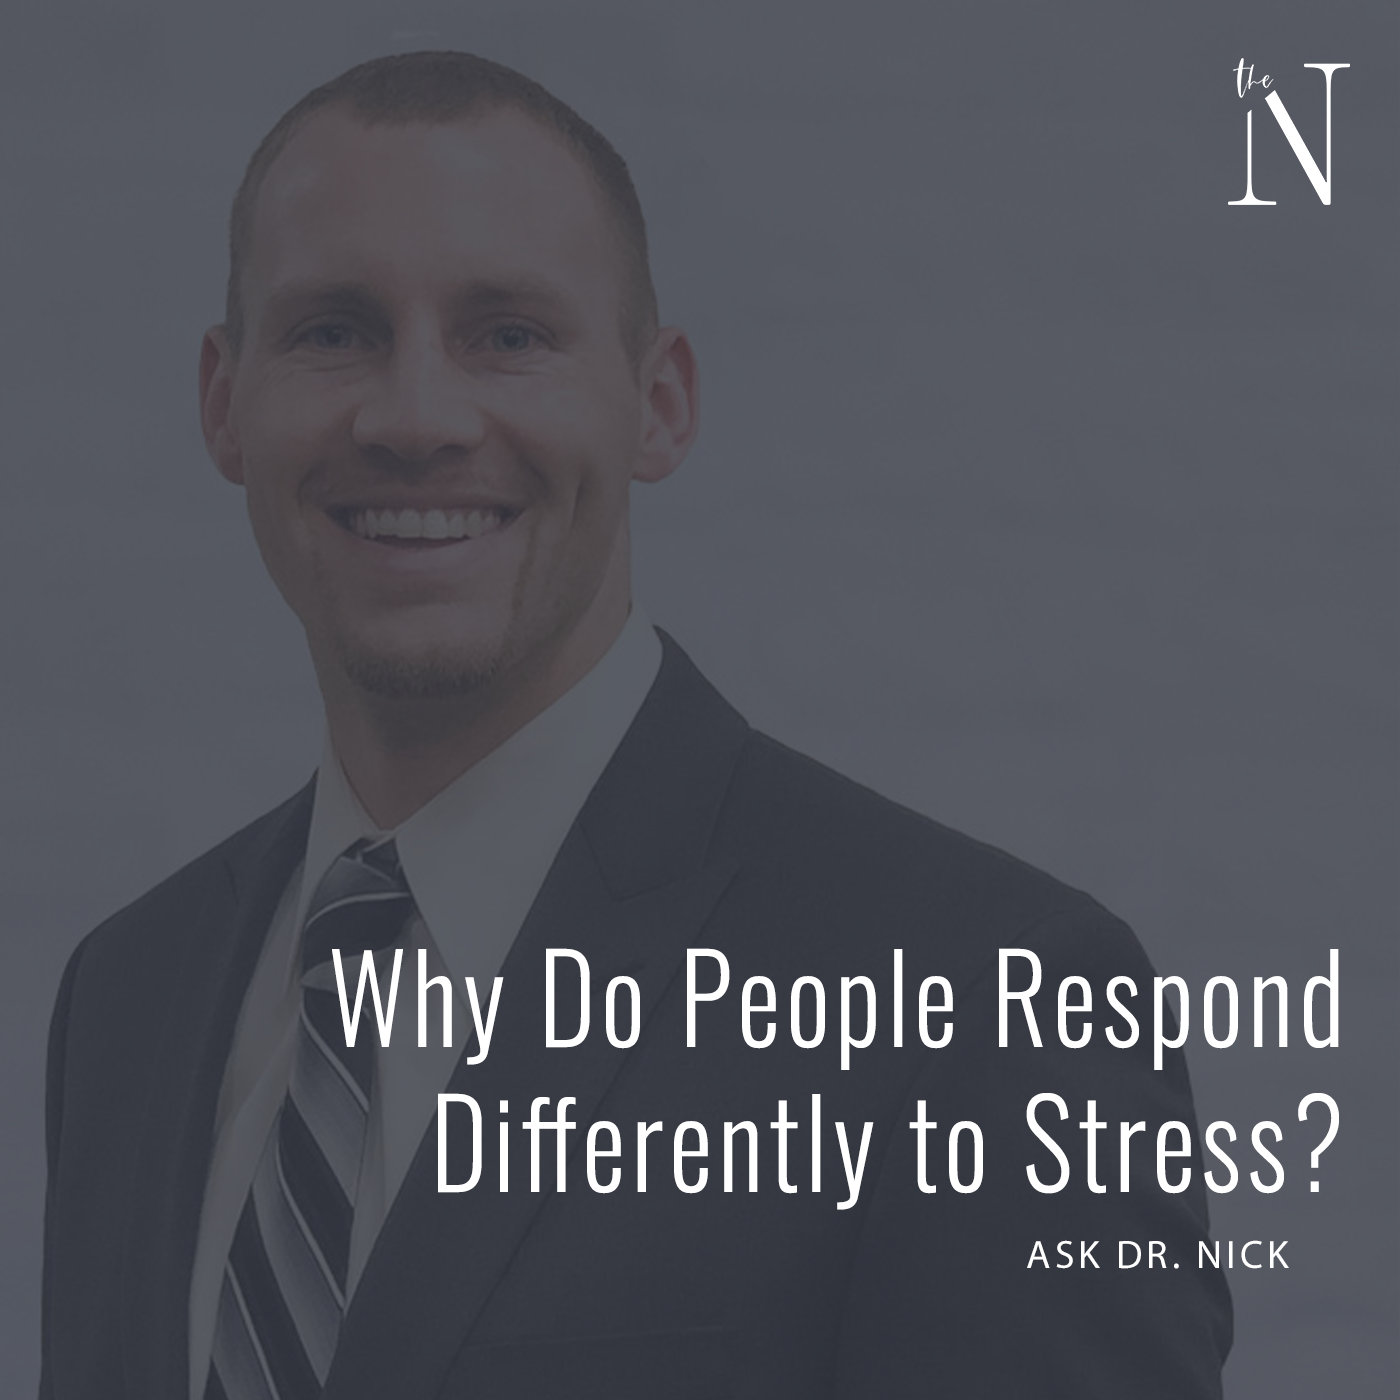 respond to stress